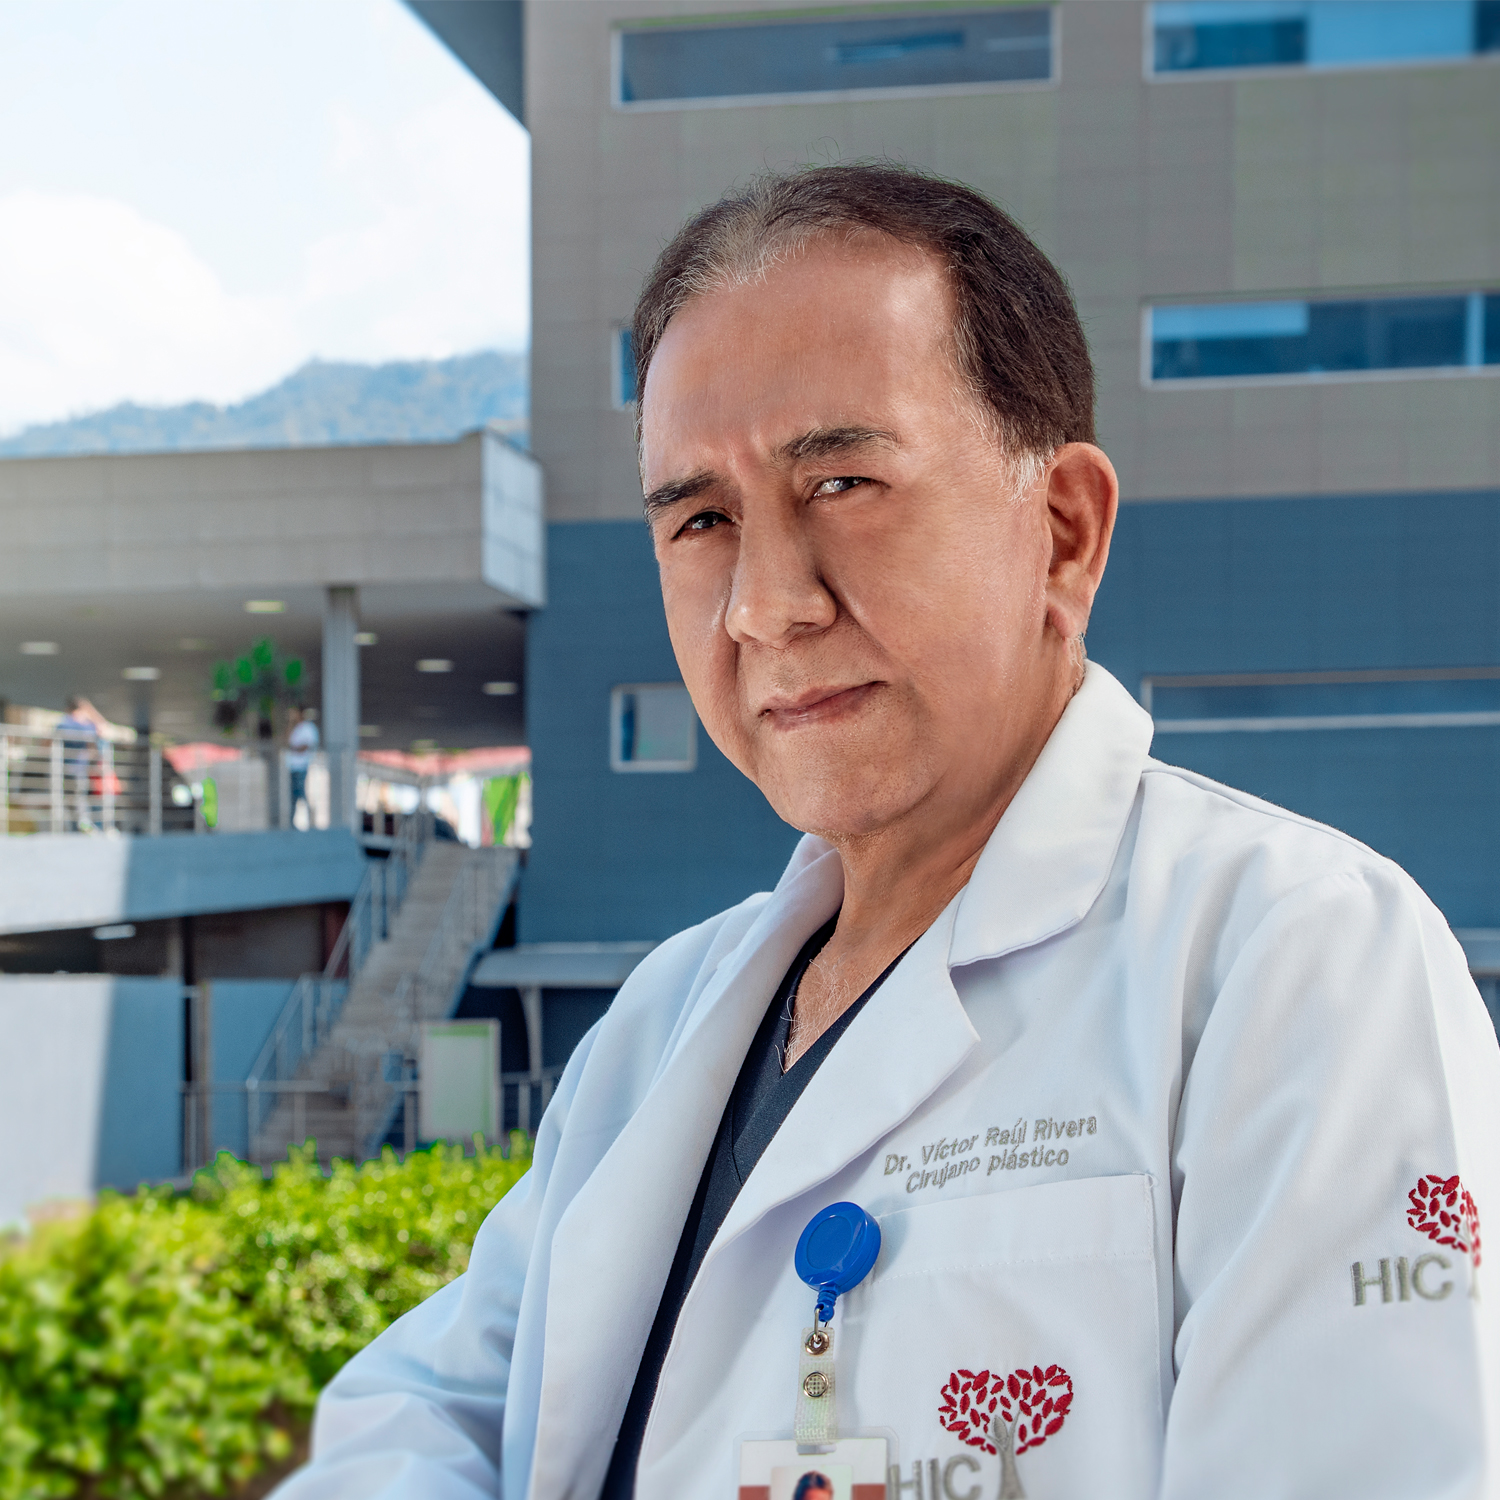 Dr. Victor Raul Rivera